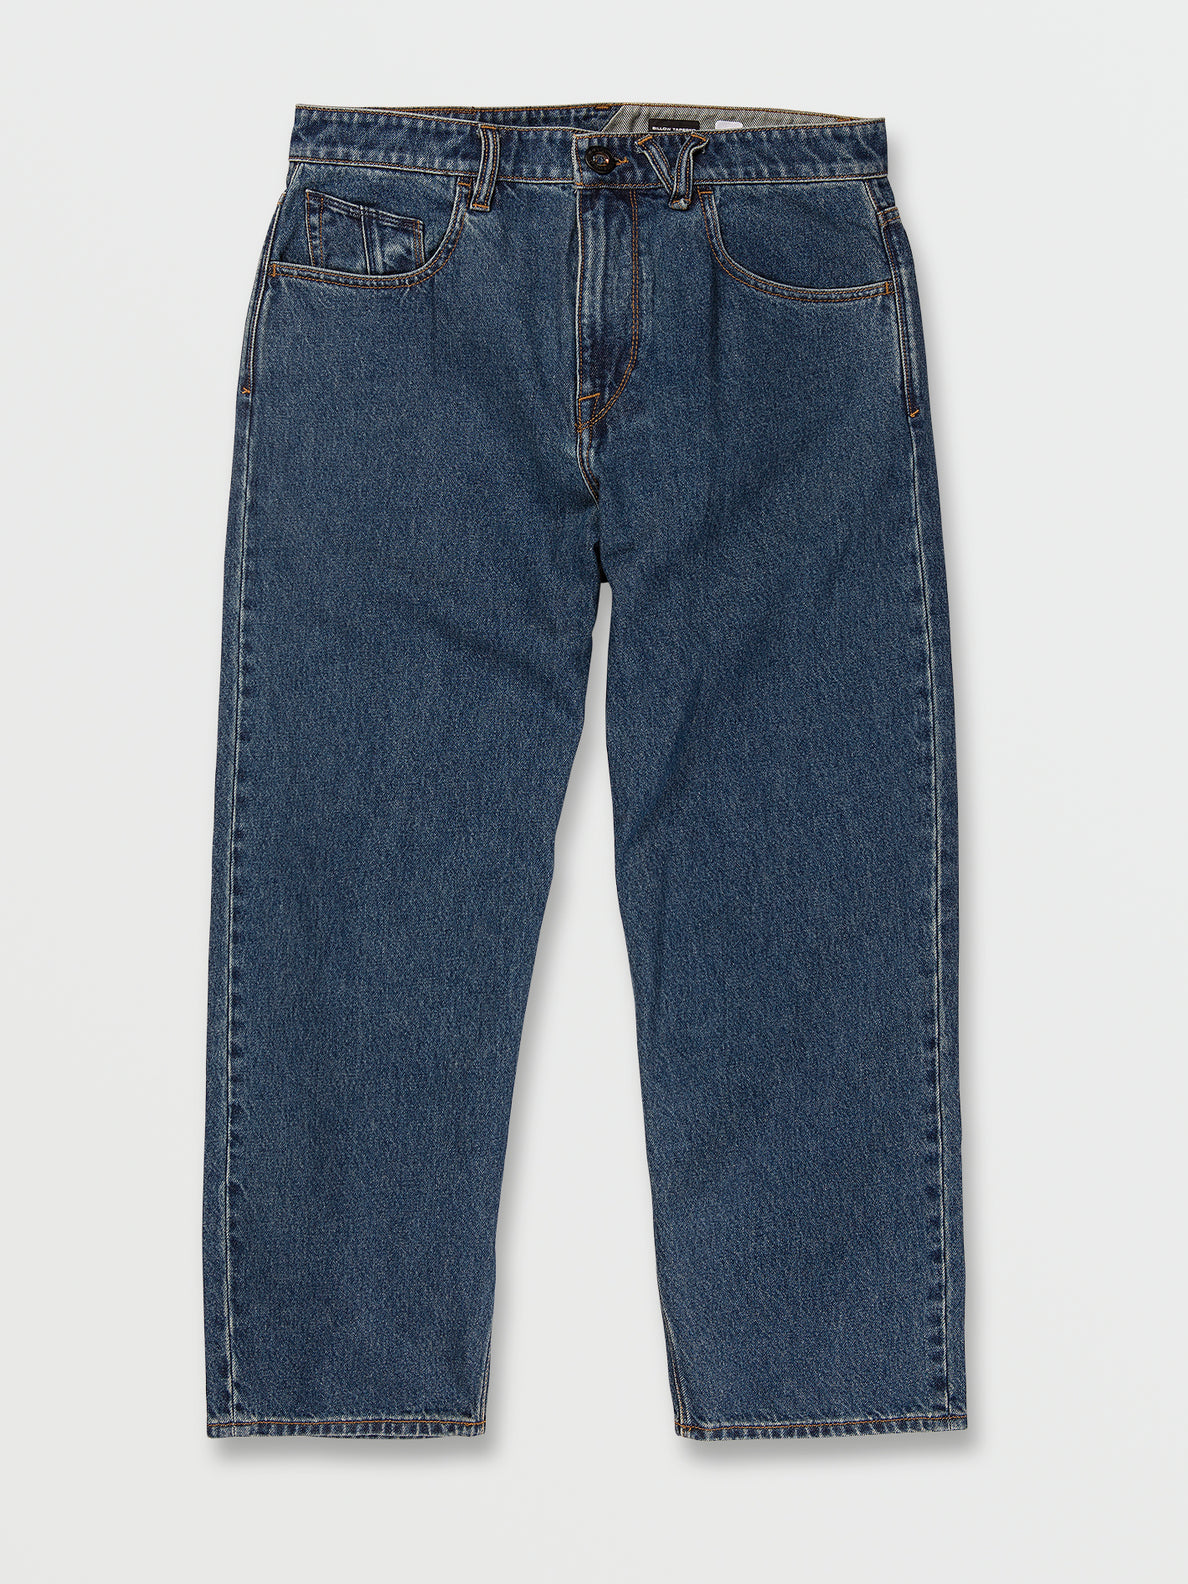 Billow Loose Tapered Fit Jeans - Indigo Ridge Wash (A1932200_IRW) [F]